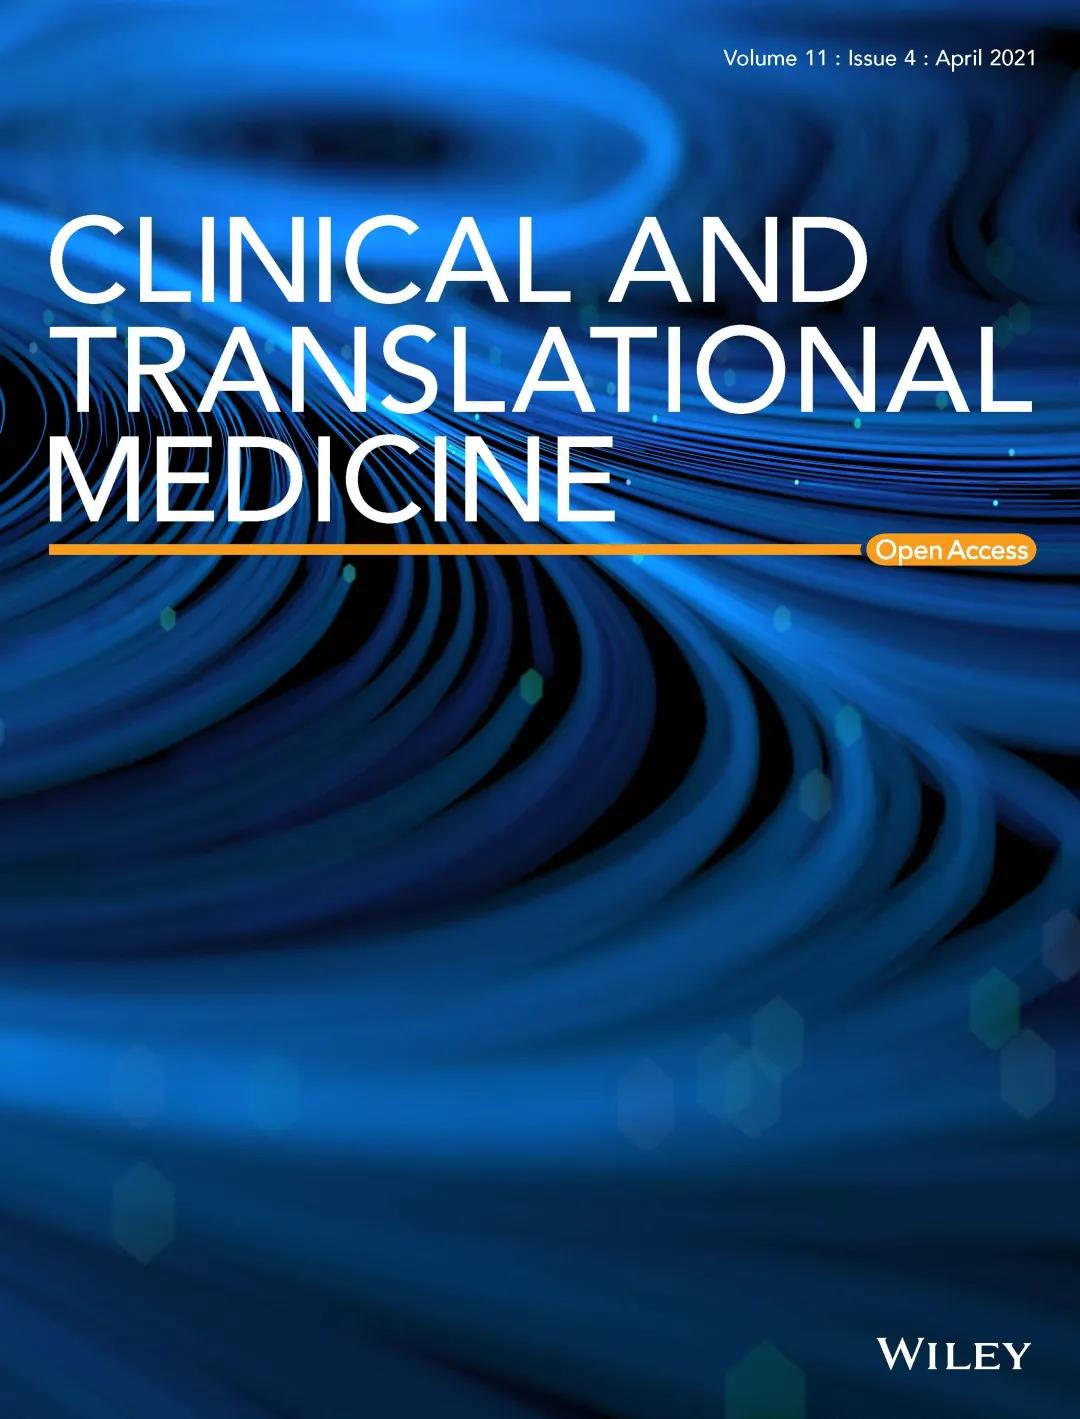 【快讯】最新影响因子超11 | Wiley医学期刊Clinical and Translational Medicine增长45%